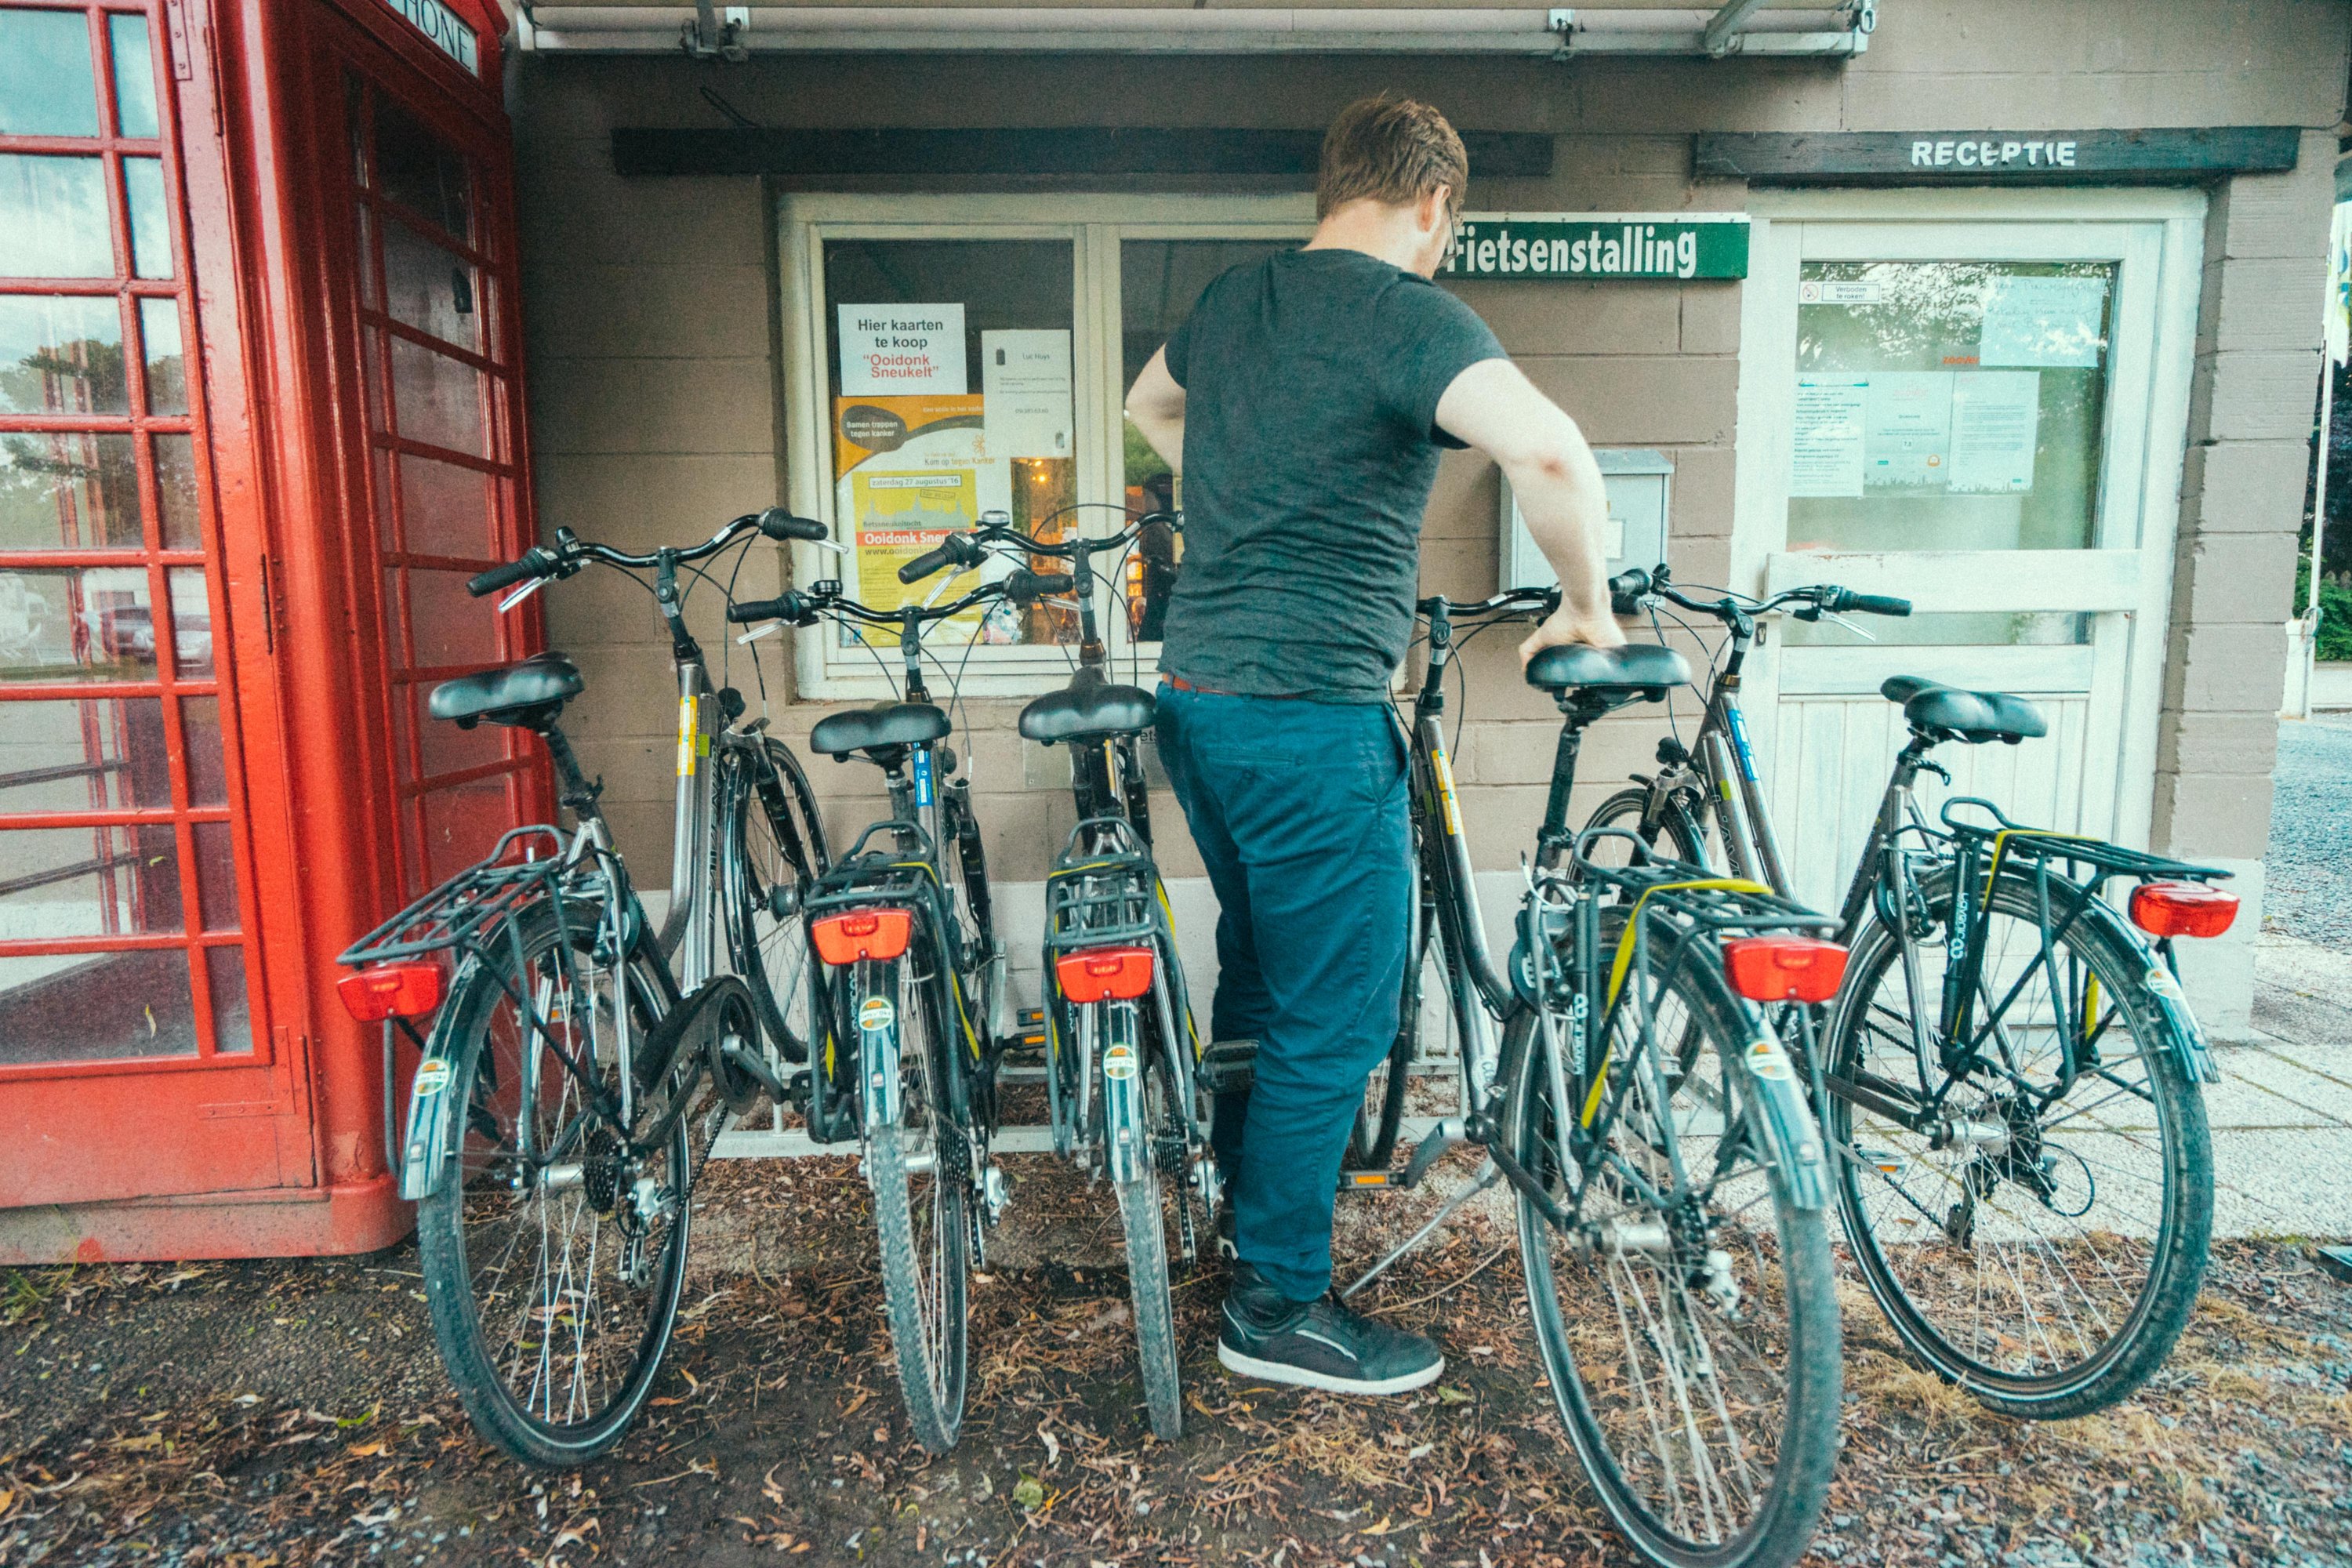 Bike rental - bike rack next to mini-bib